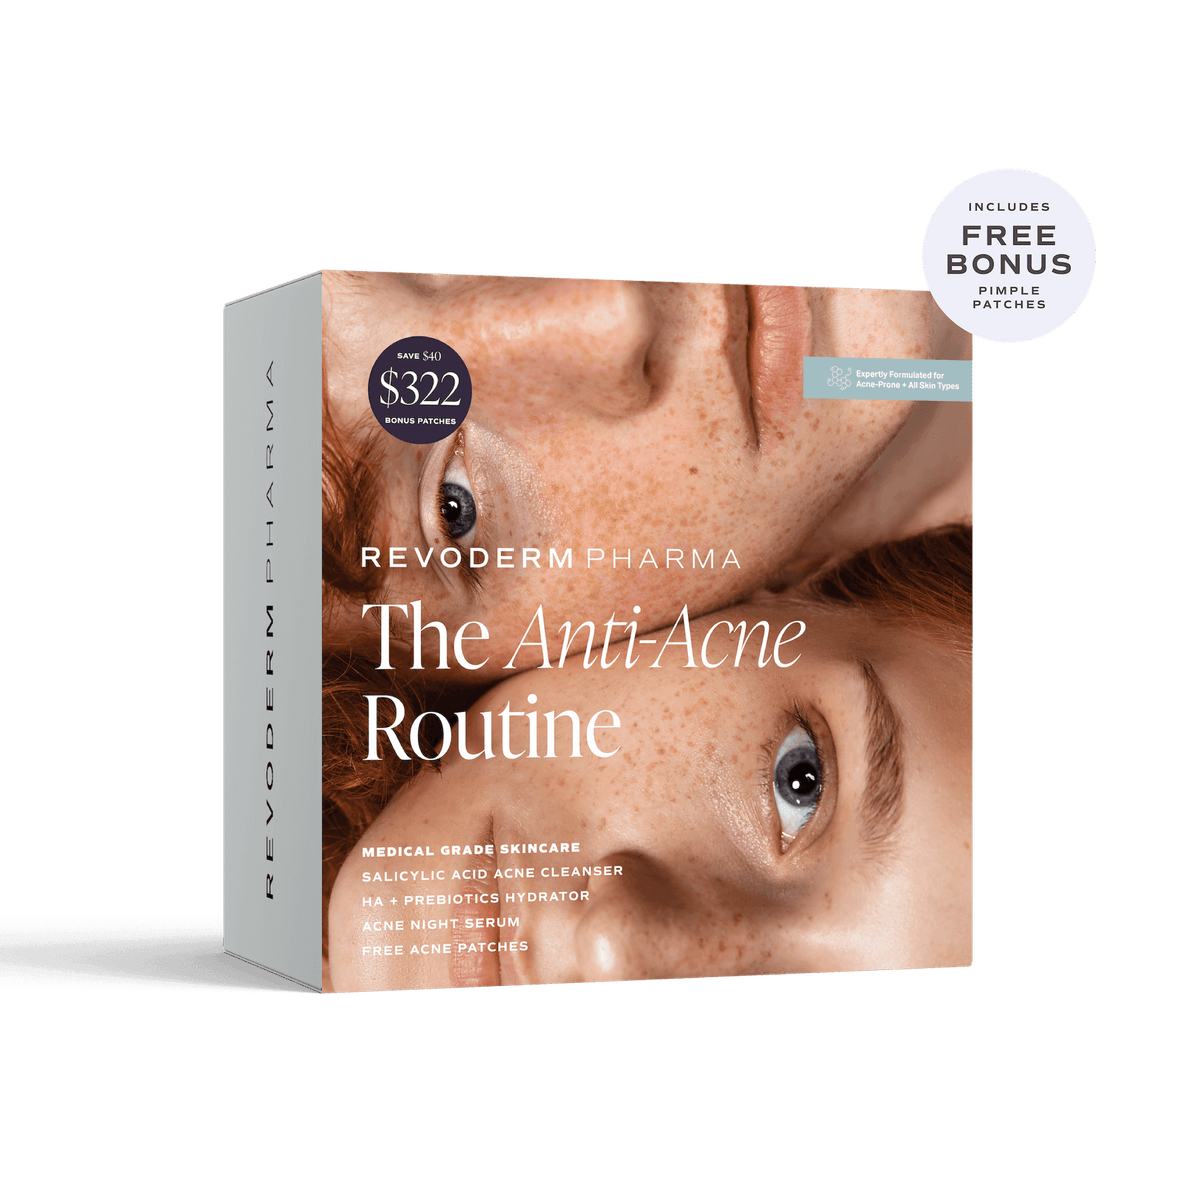 The Anti-Acne Routine